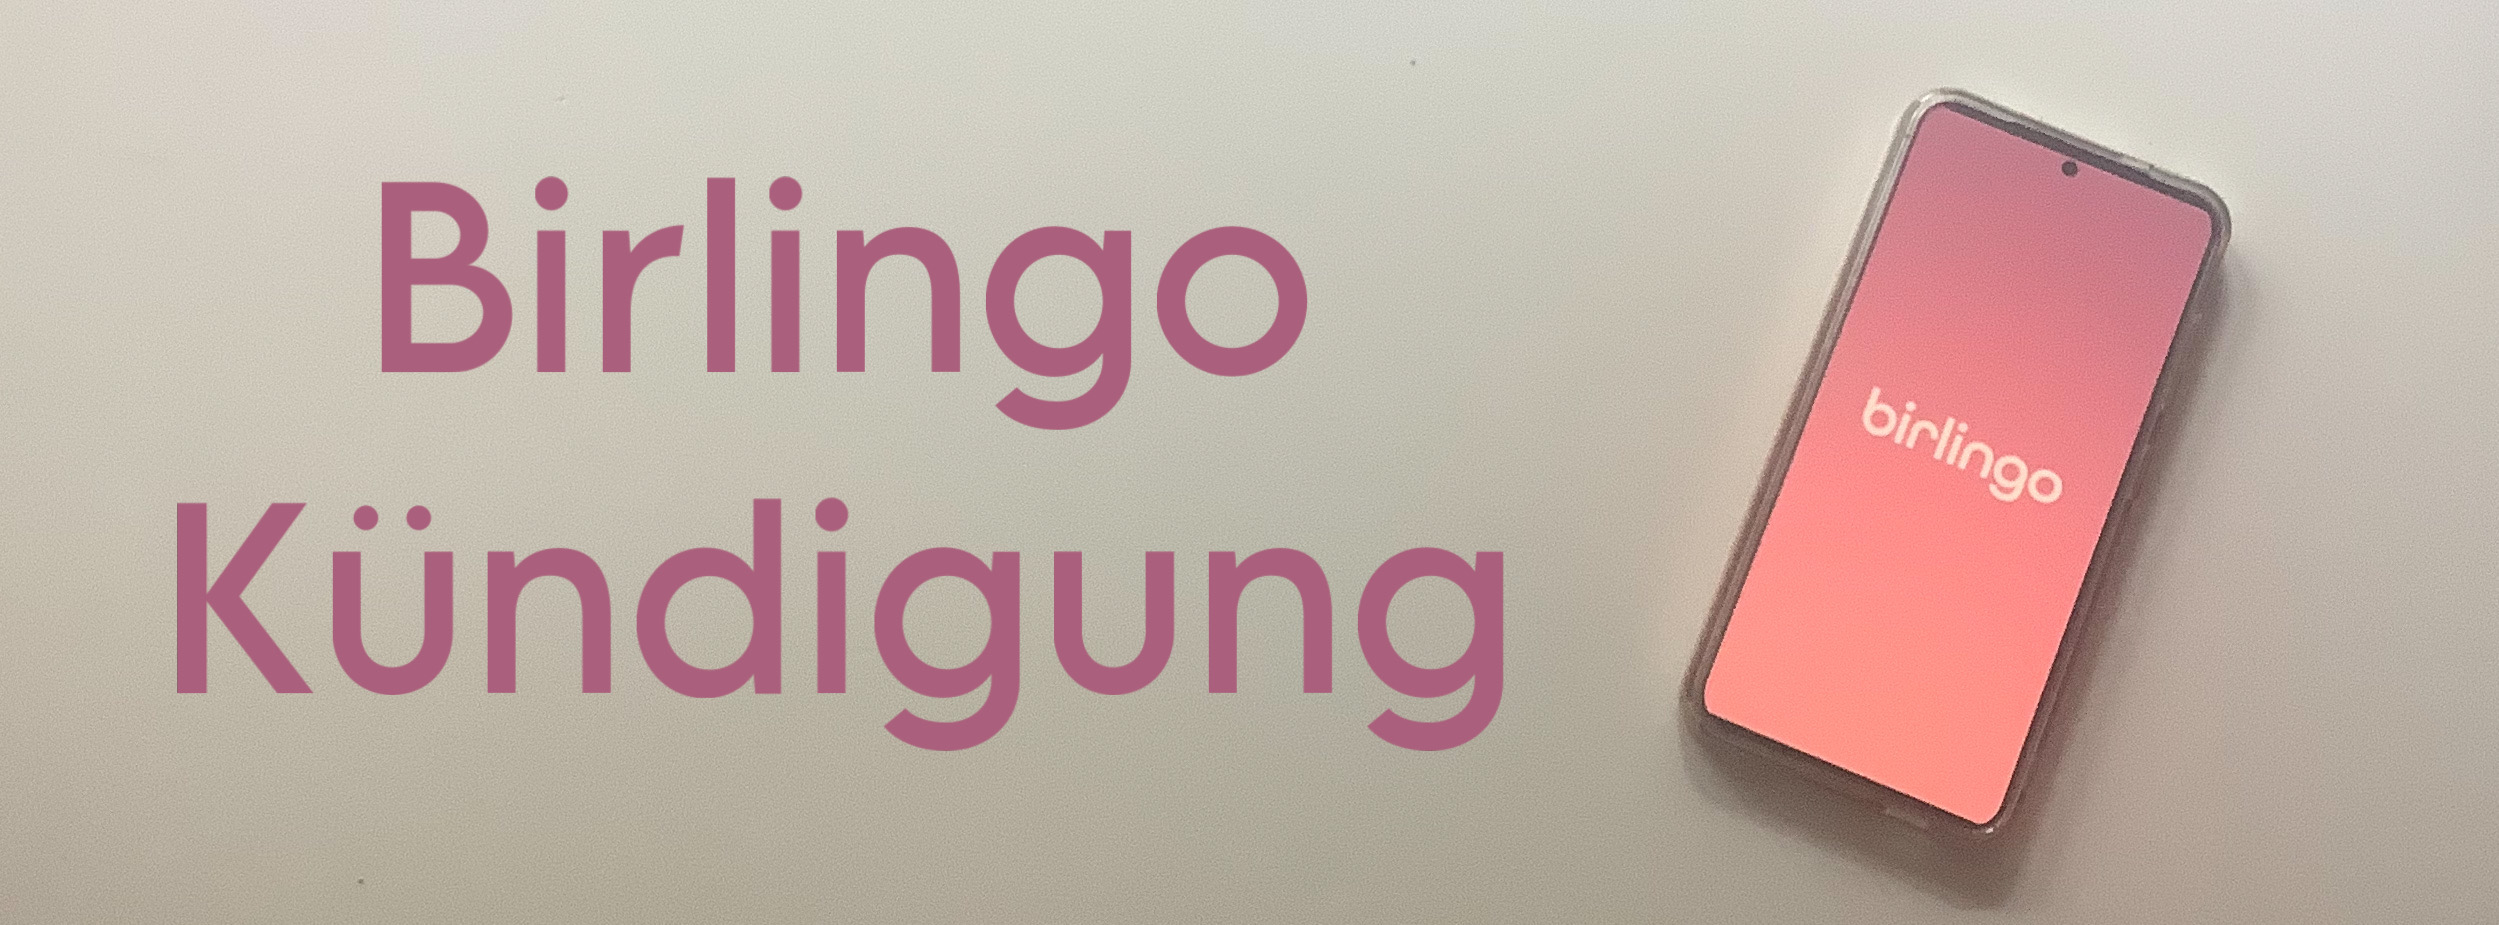 Birlingo Kündigung Coverbild